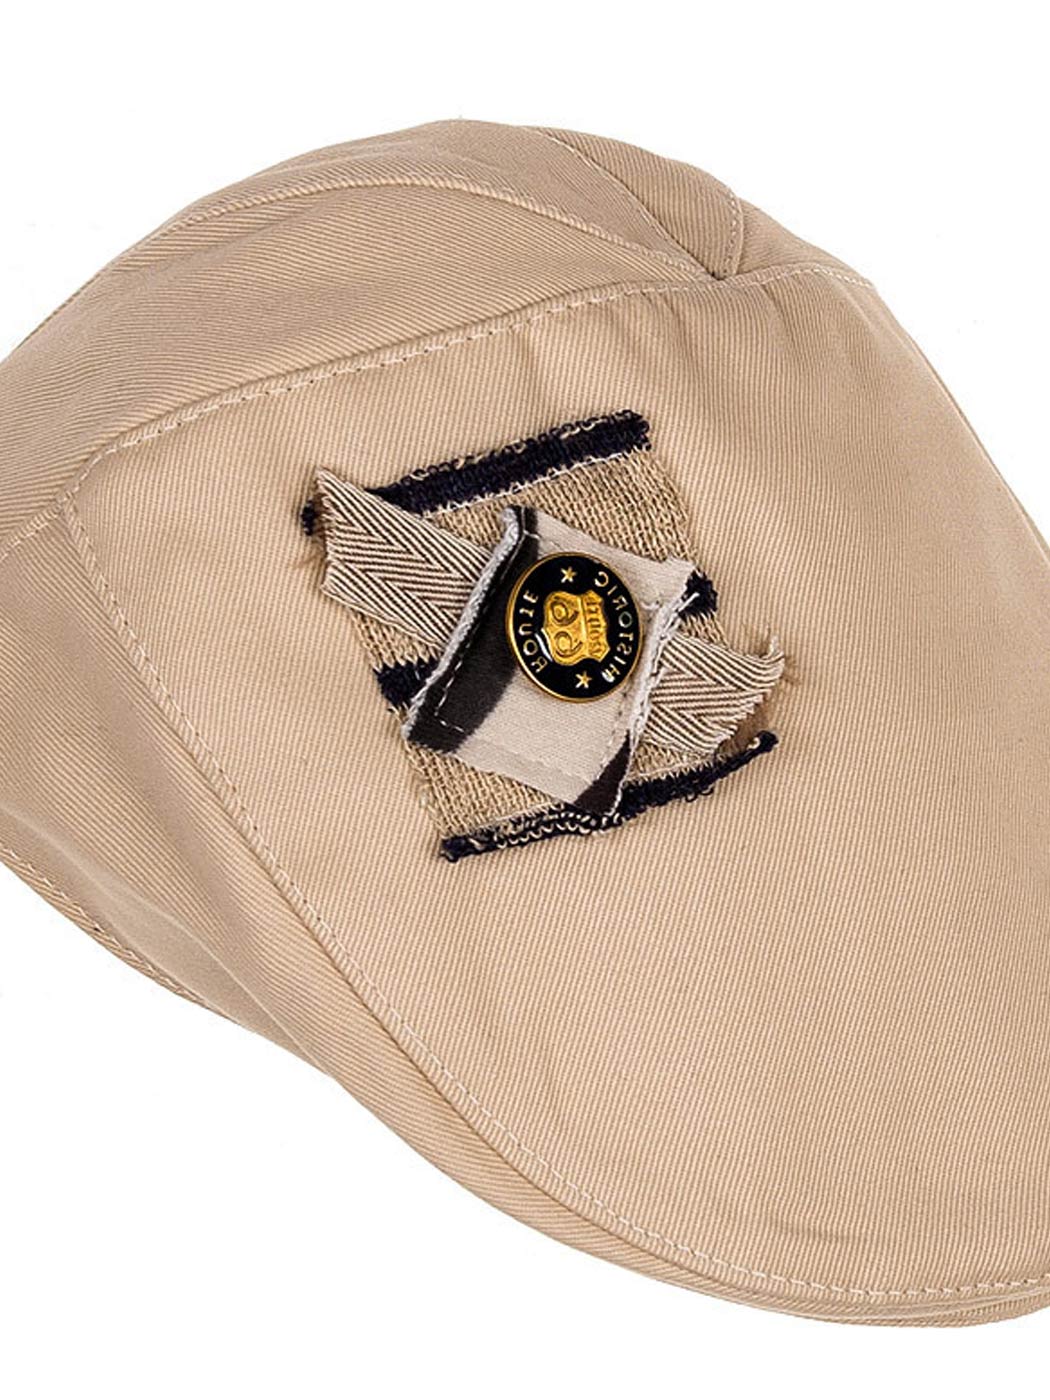 Baby's Hat for boy beige - OLIVER Cap